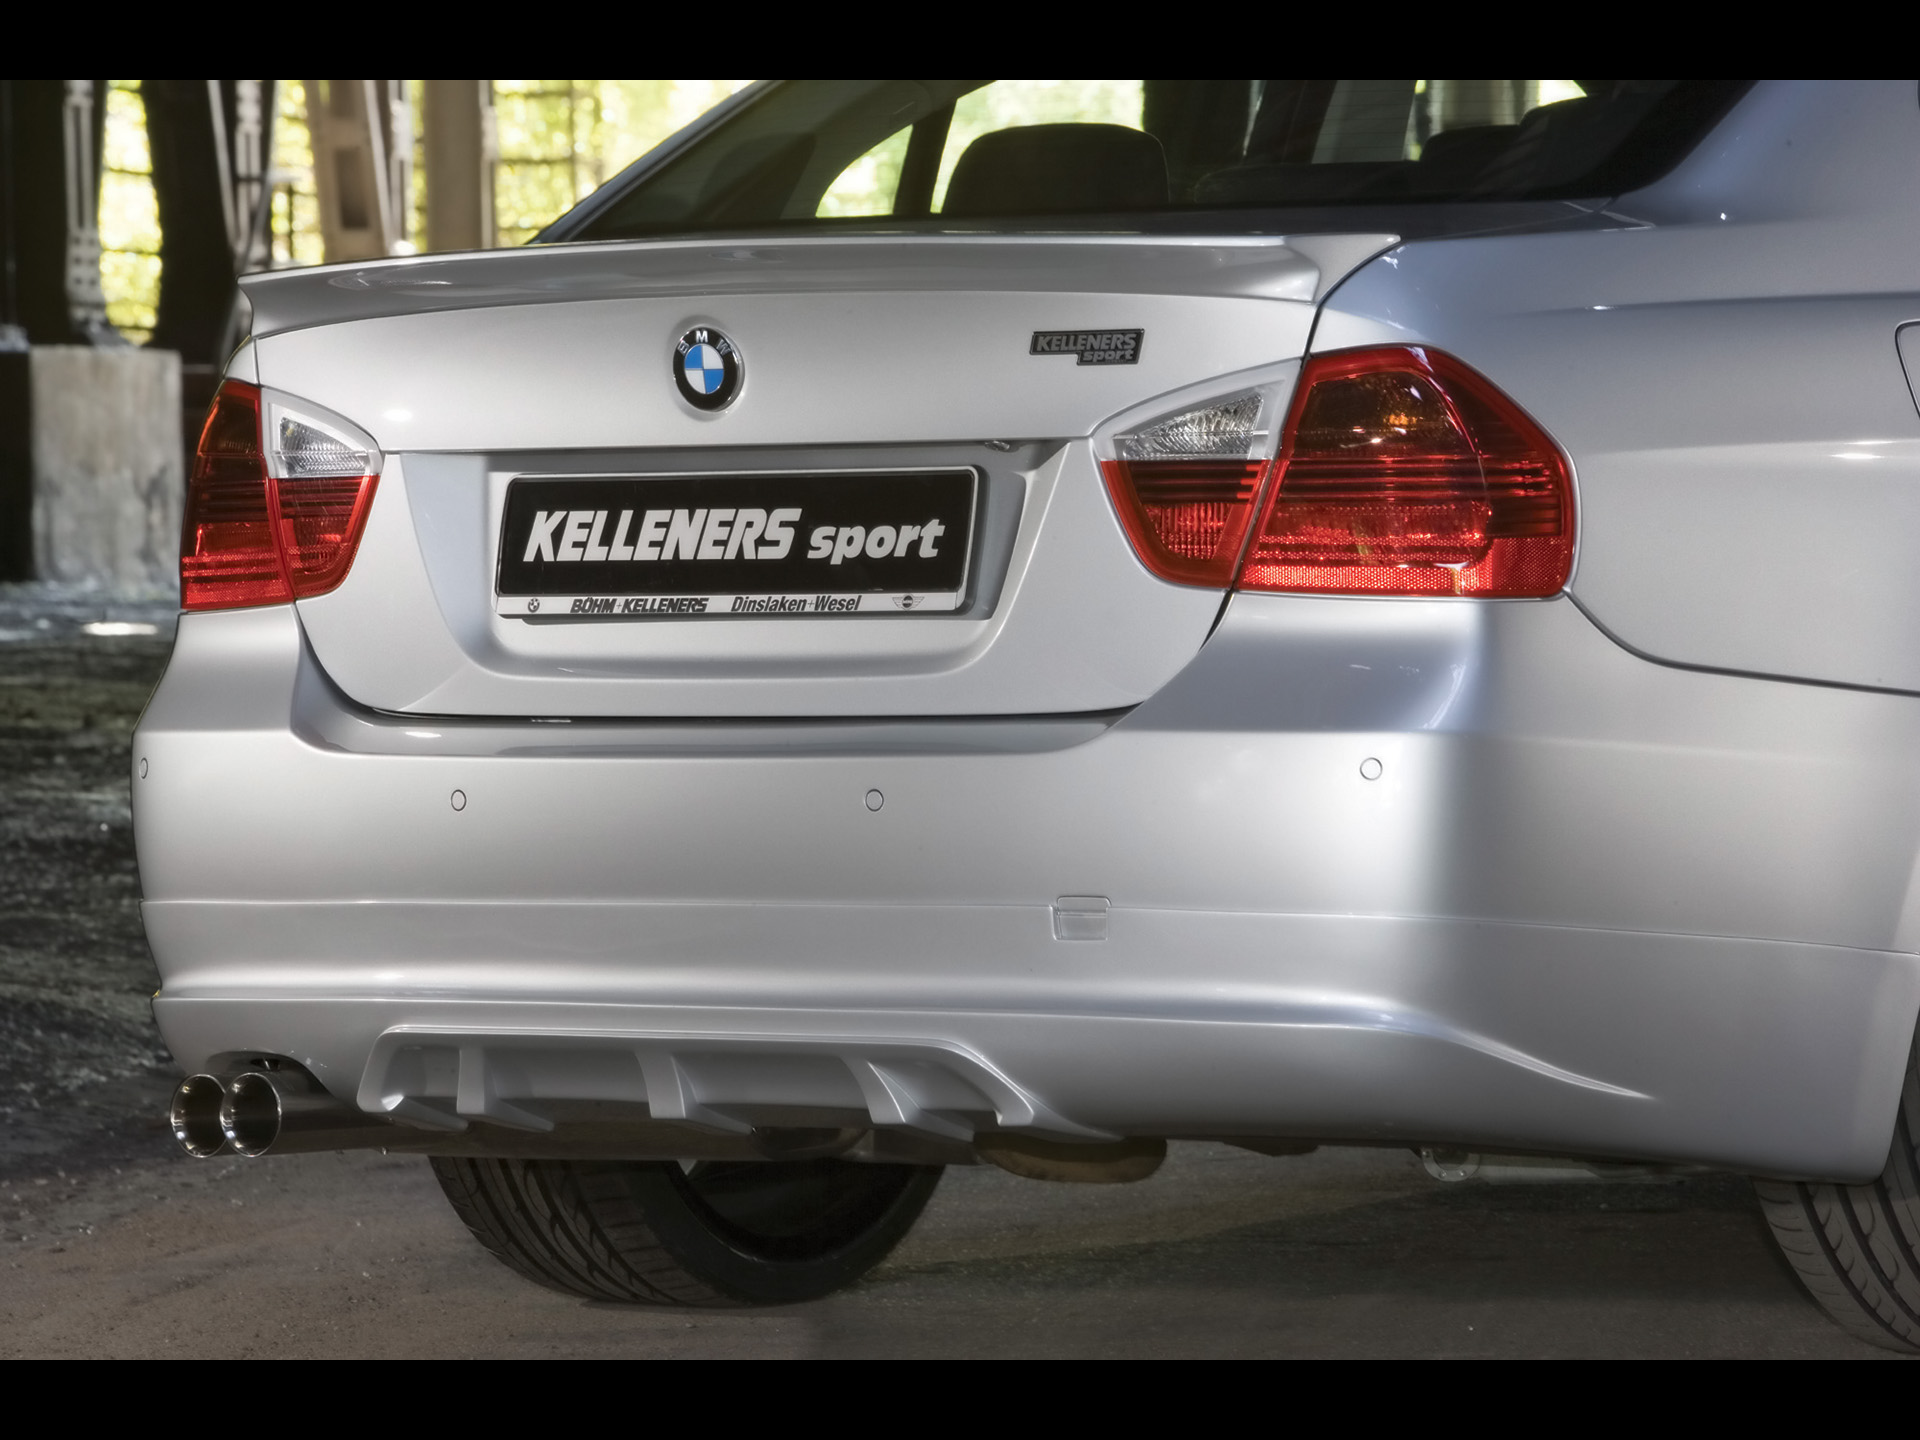 Kelleners Sport BMW 3 Series photo 45385